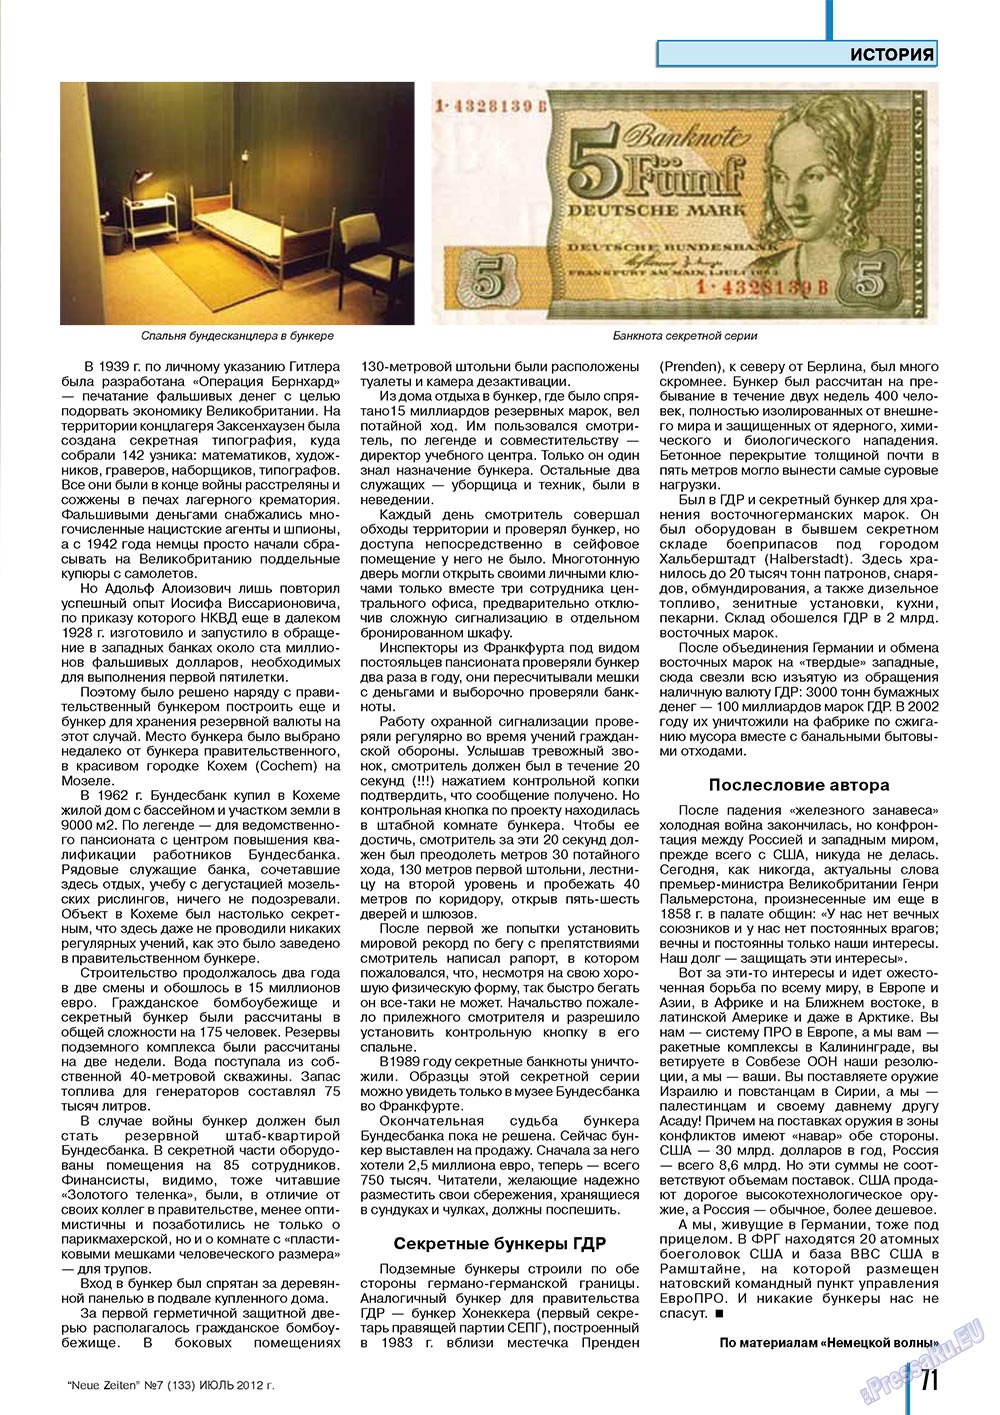 Neue Zeiten (журнал). 2012 год, номер 7, стр. 71